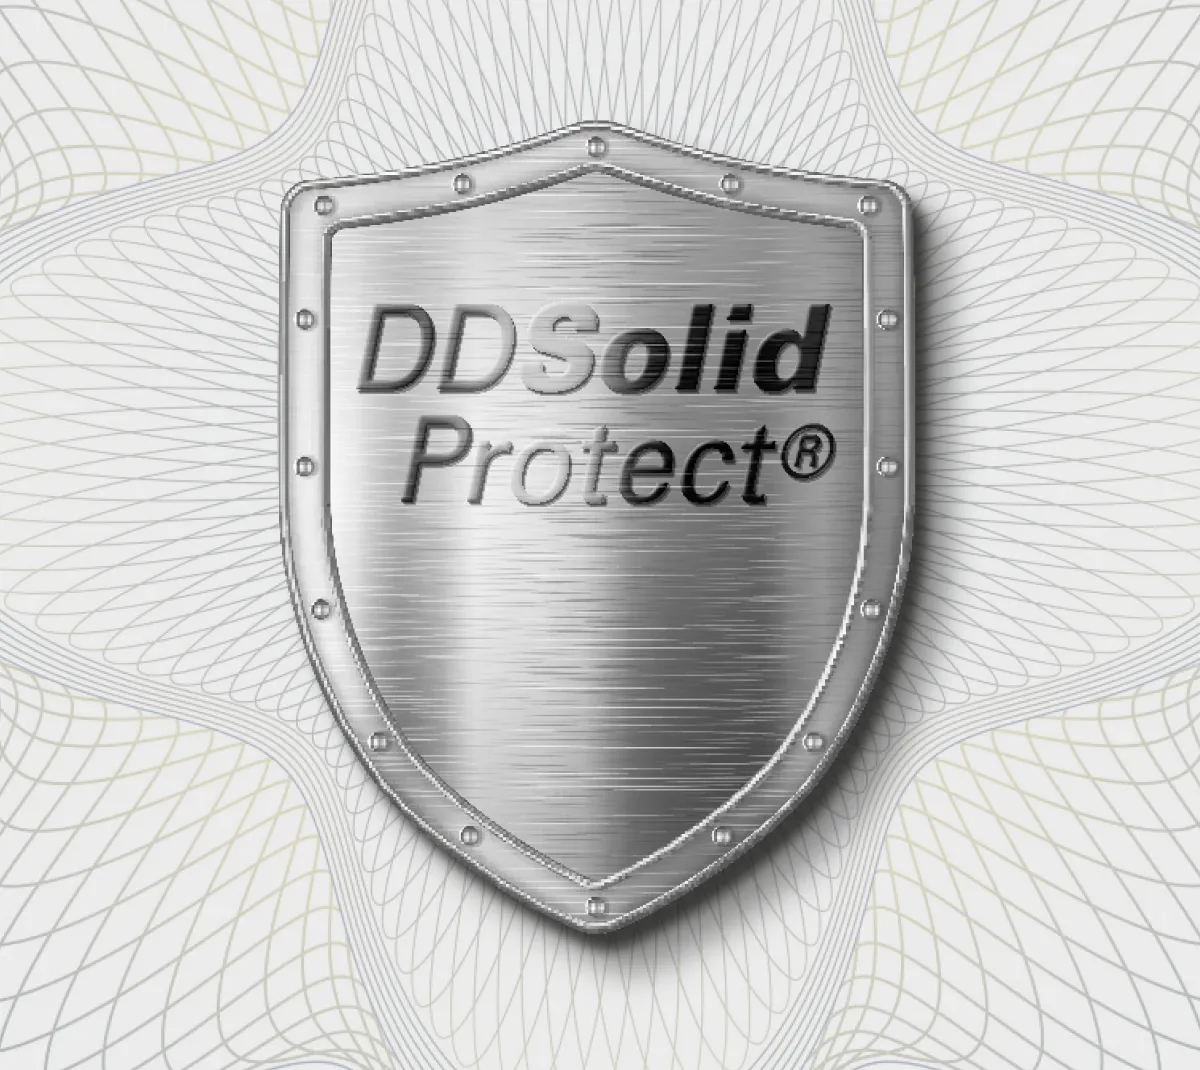 DD journal DD Solid Protect Schild